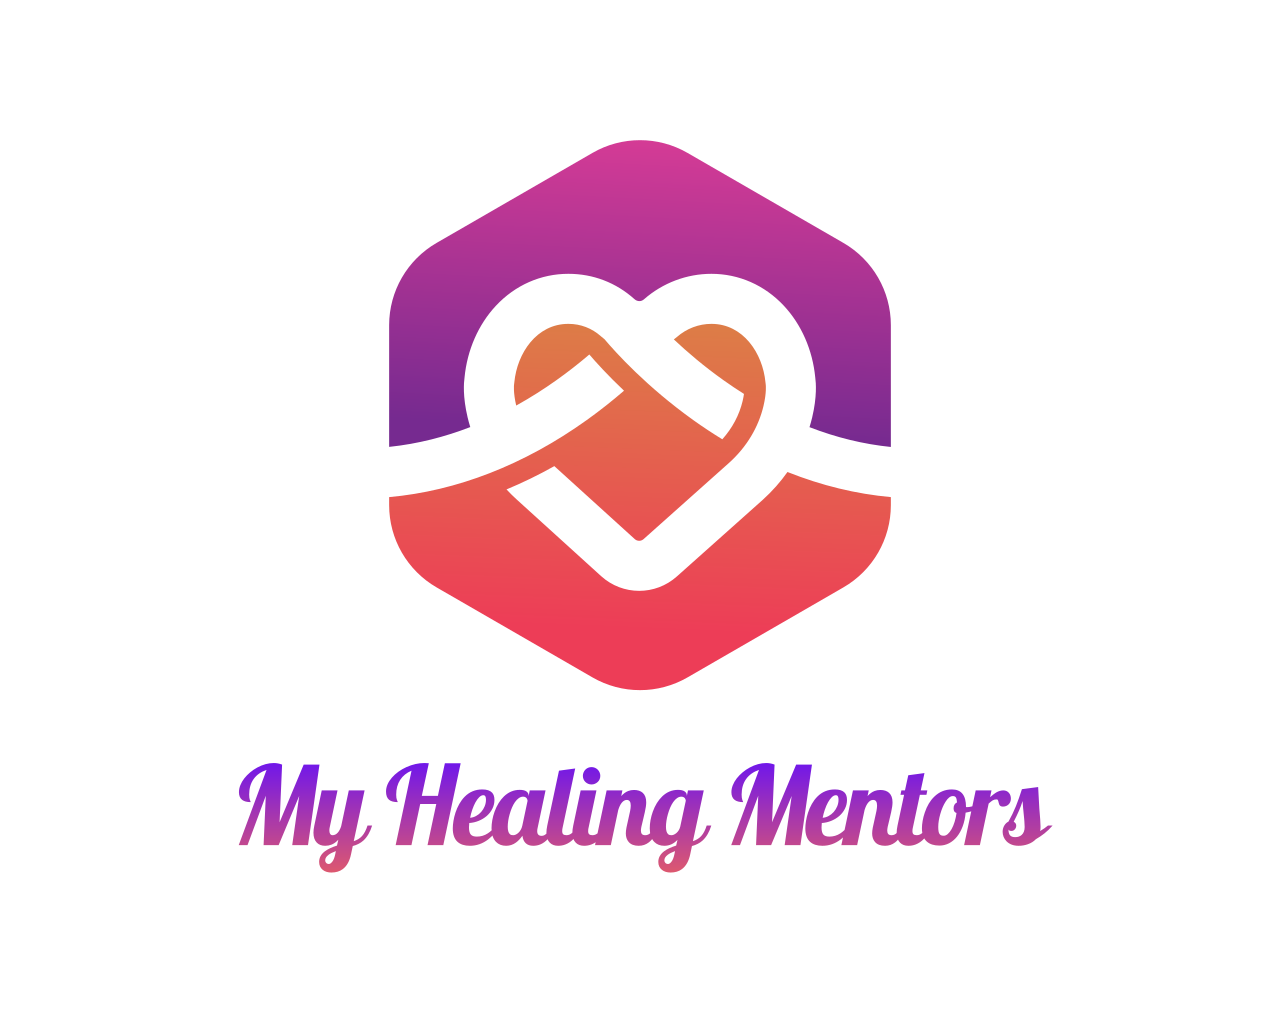 My Healing Mentors - free program offering 3 minute healing videos